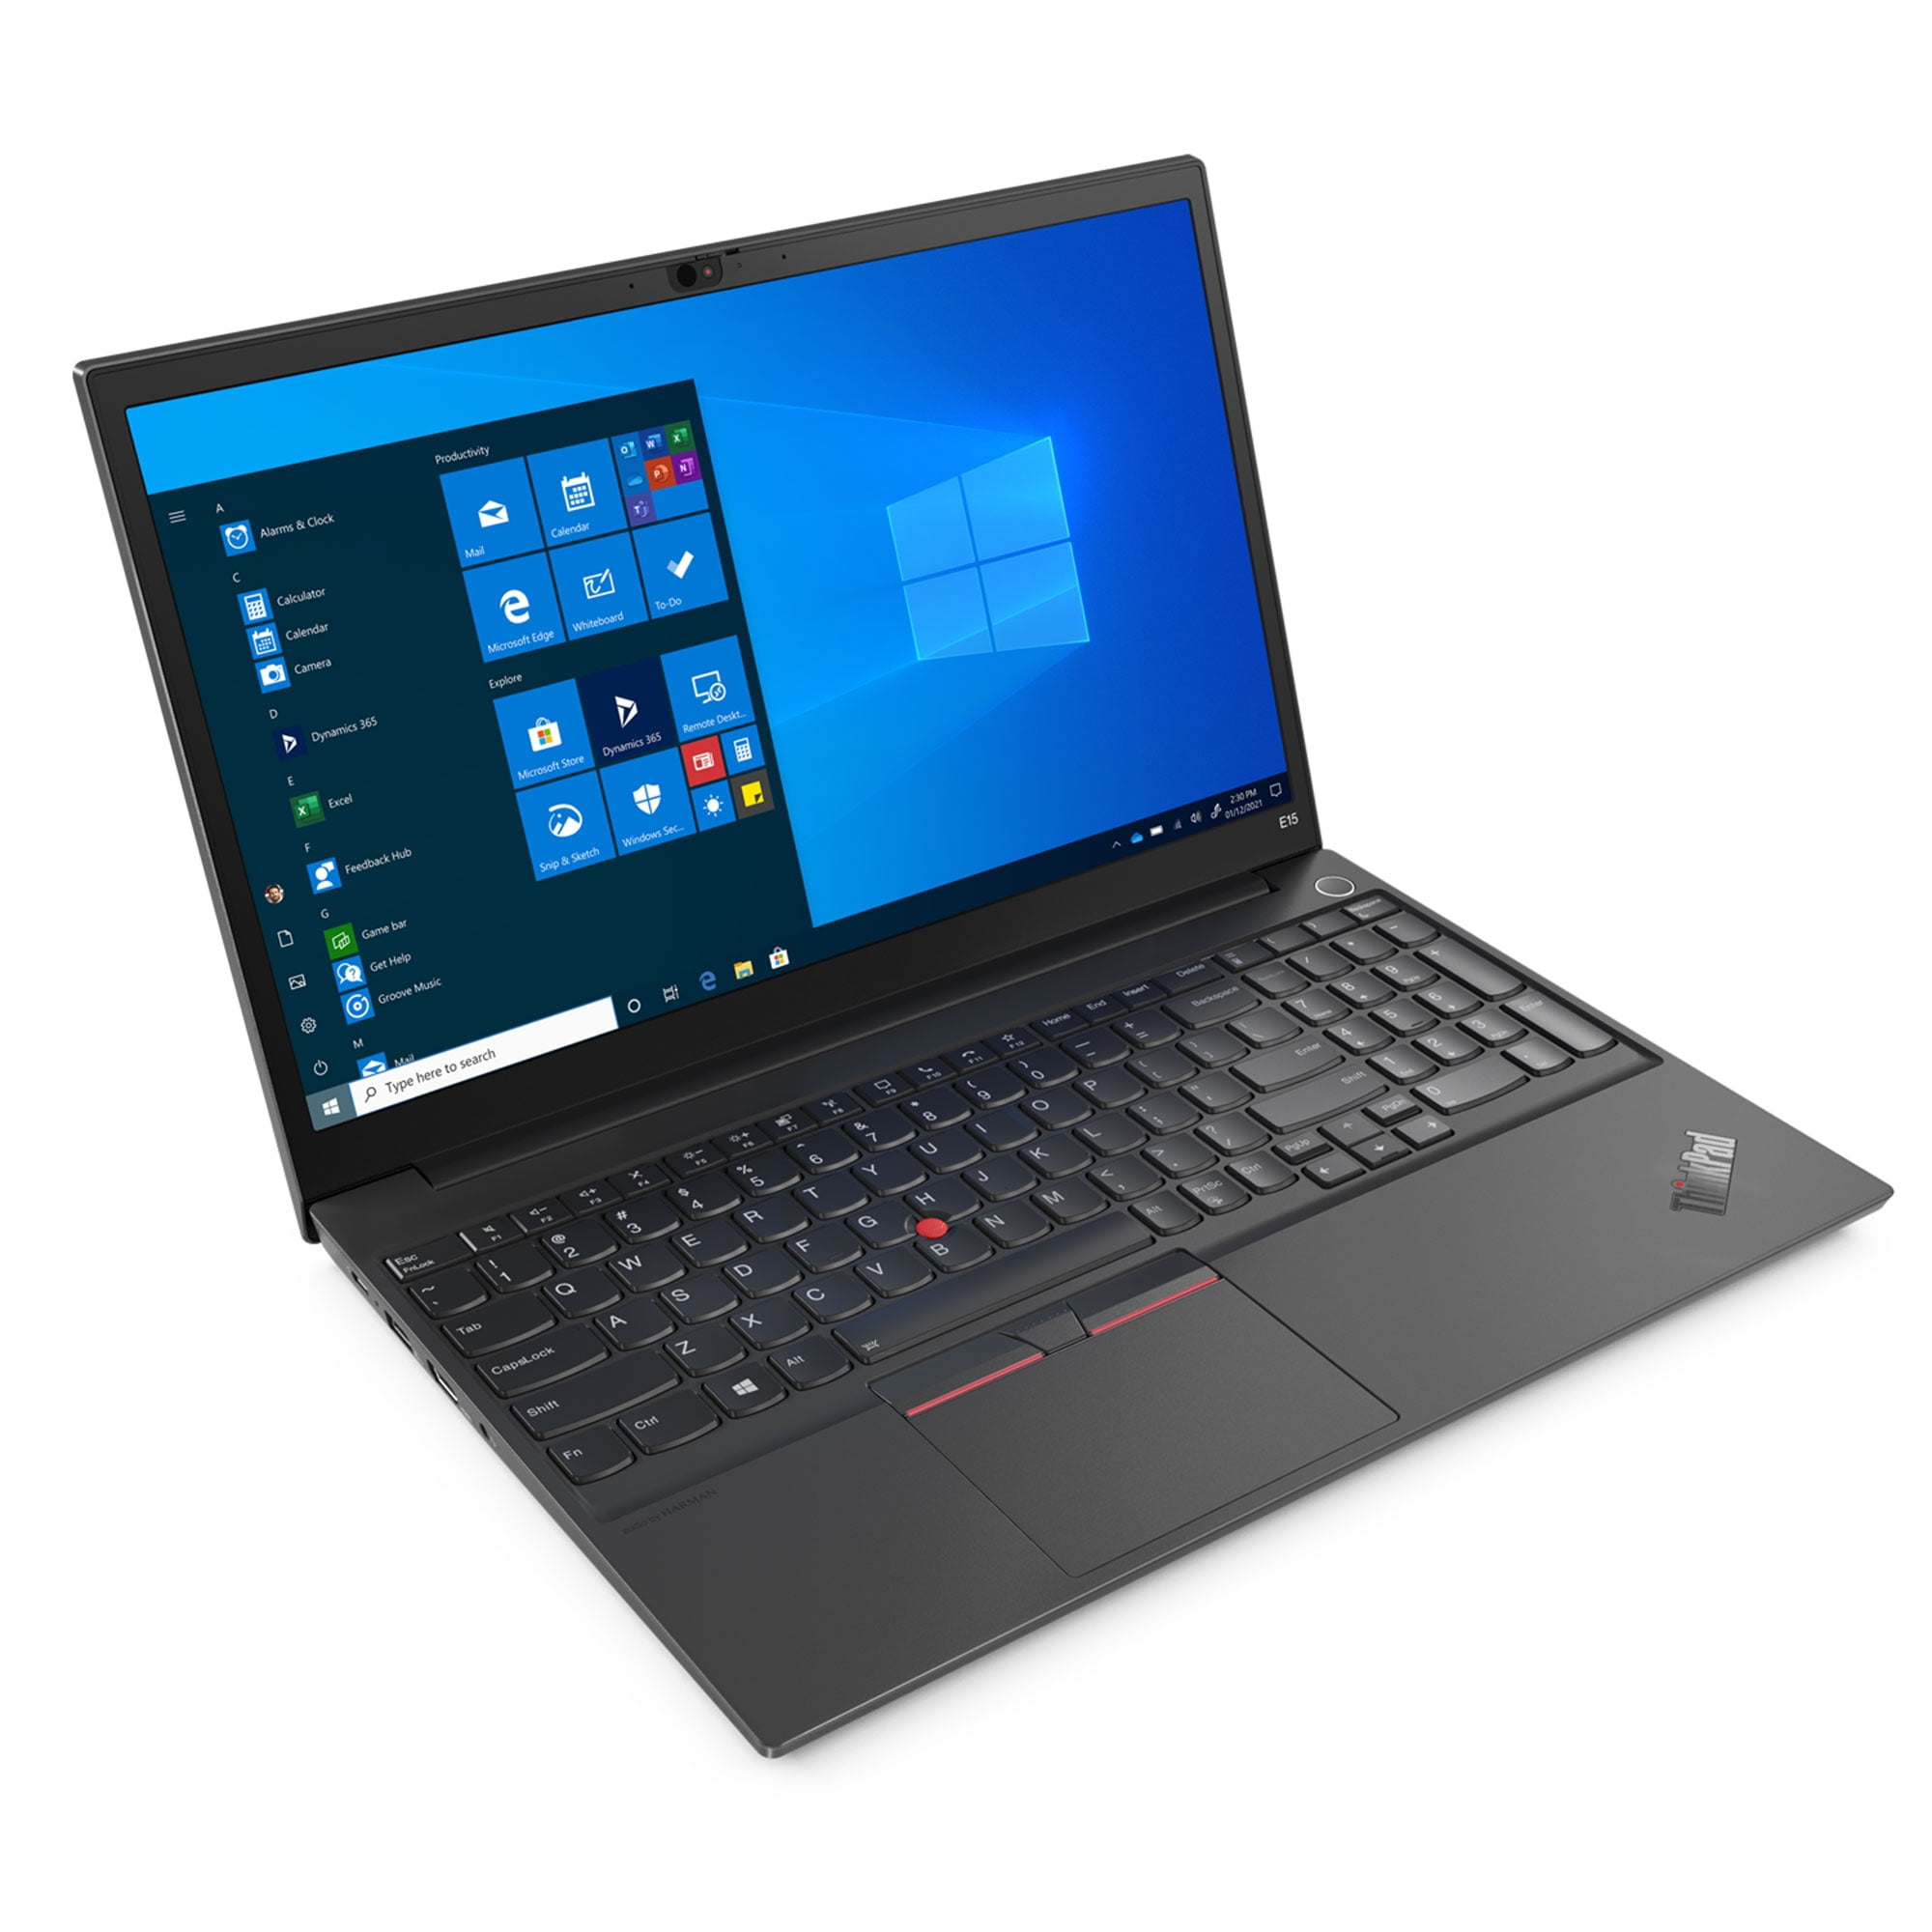 Lenovo ThinkPad E15 Gen 3 AMD カスタマイズ有